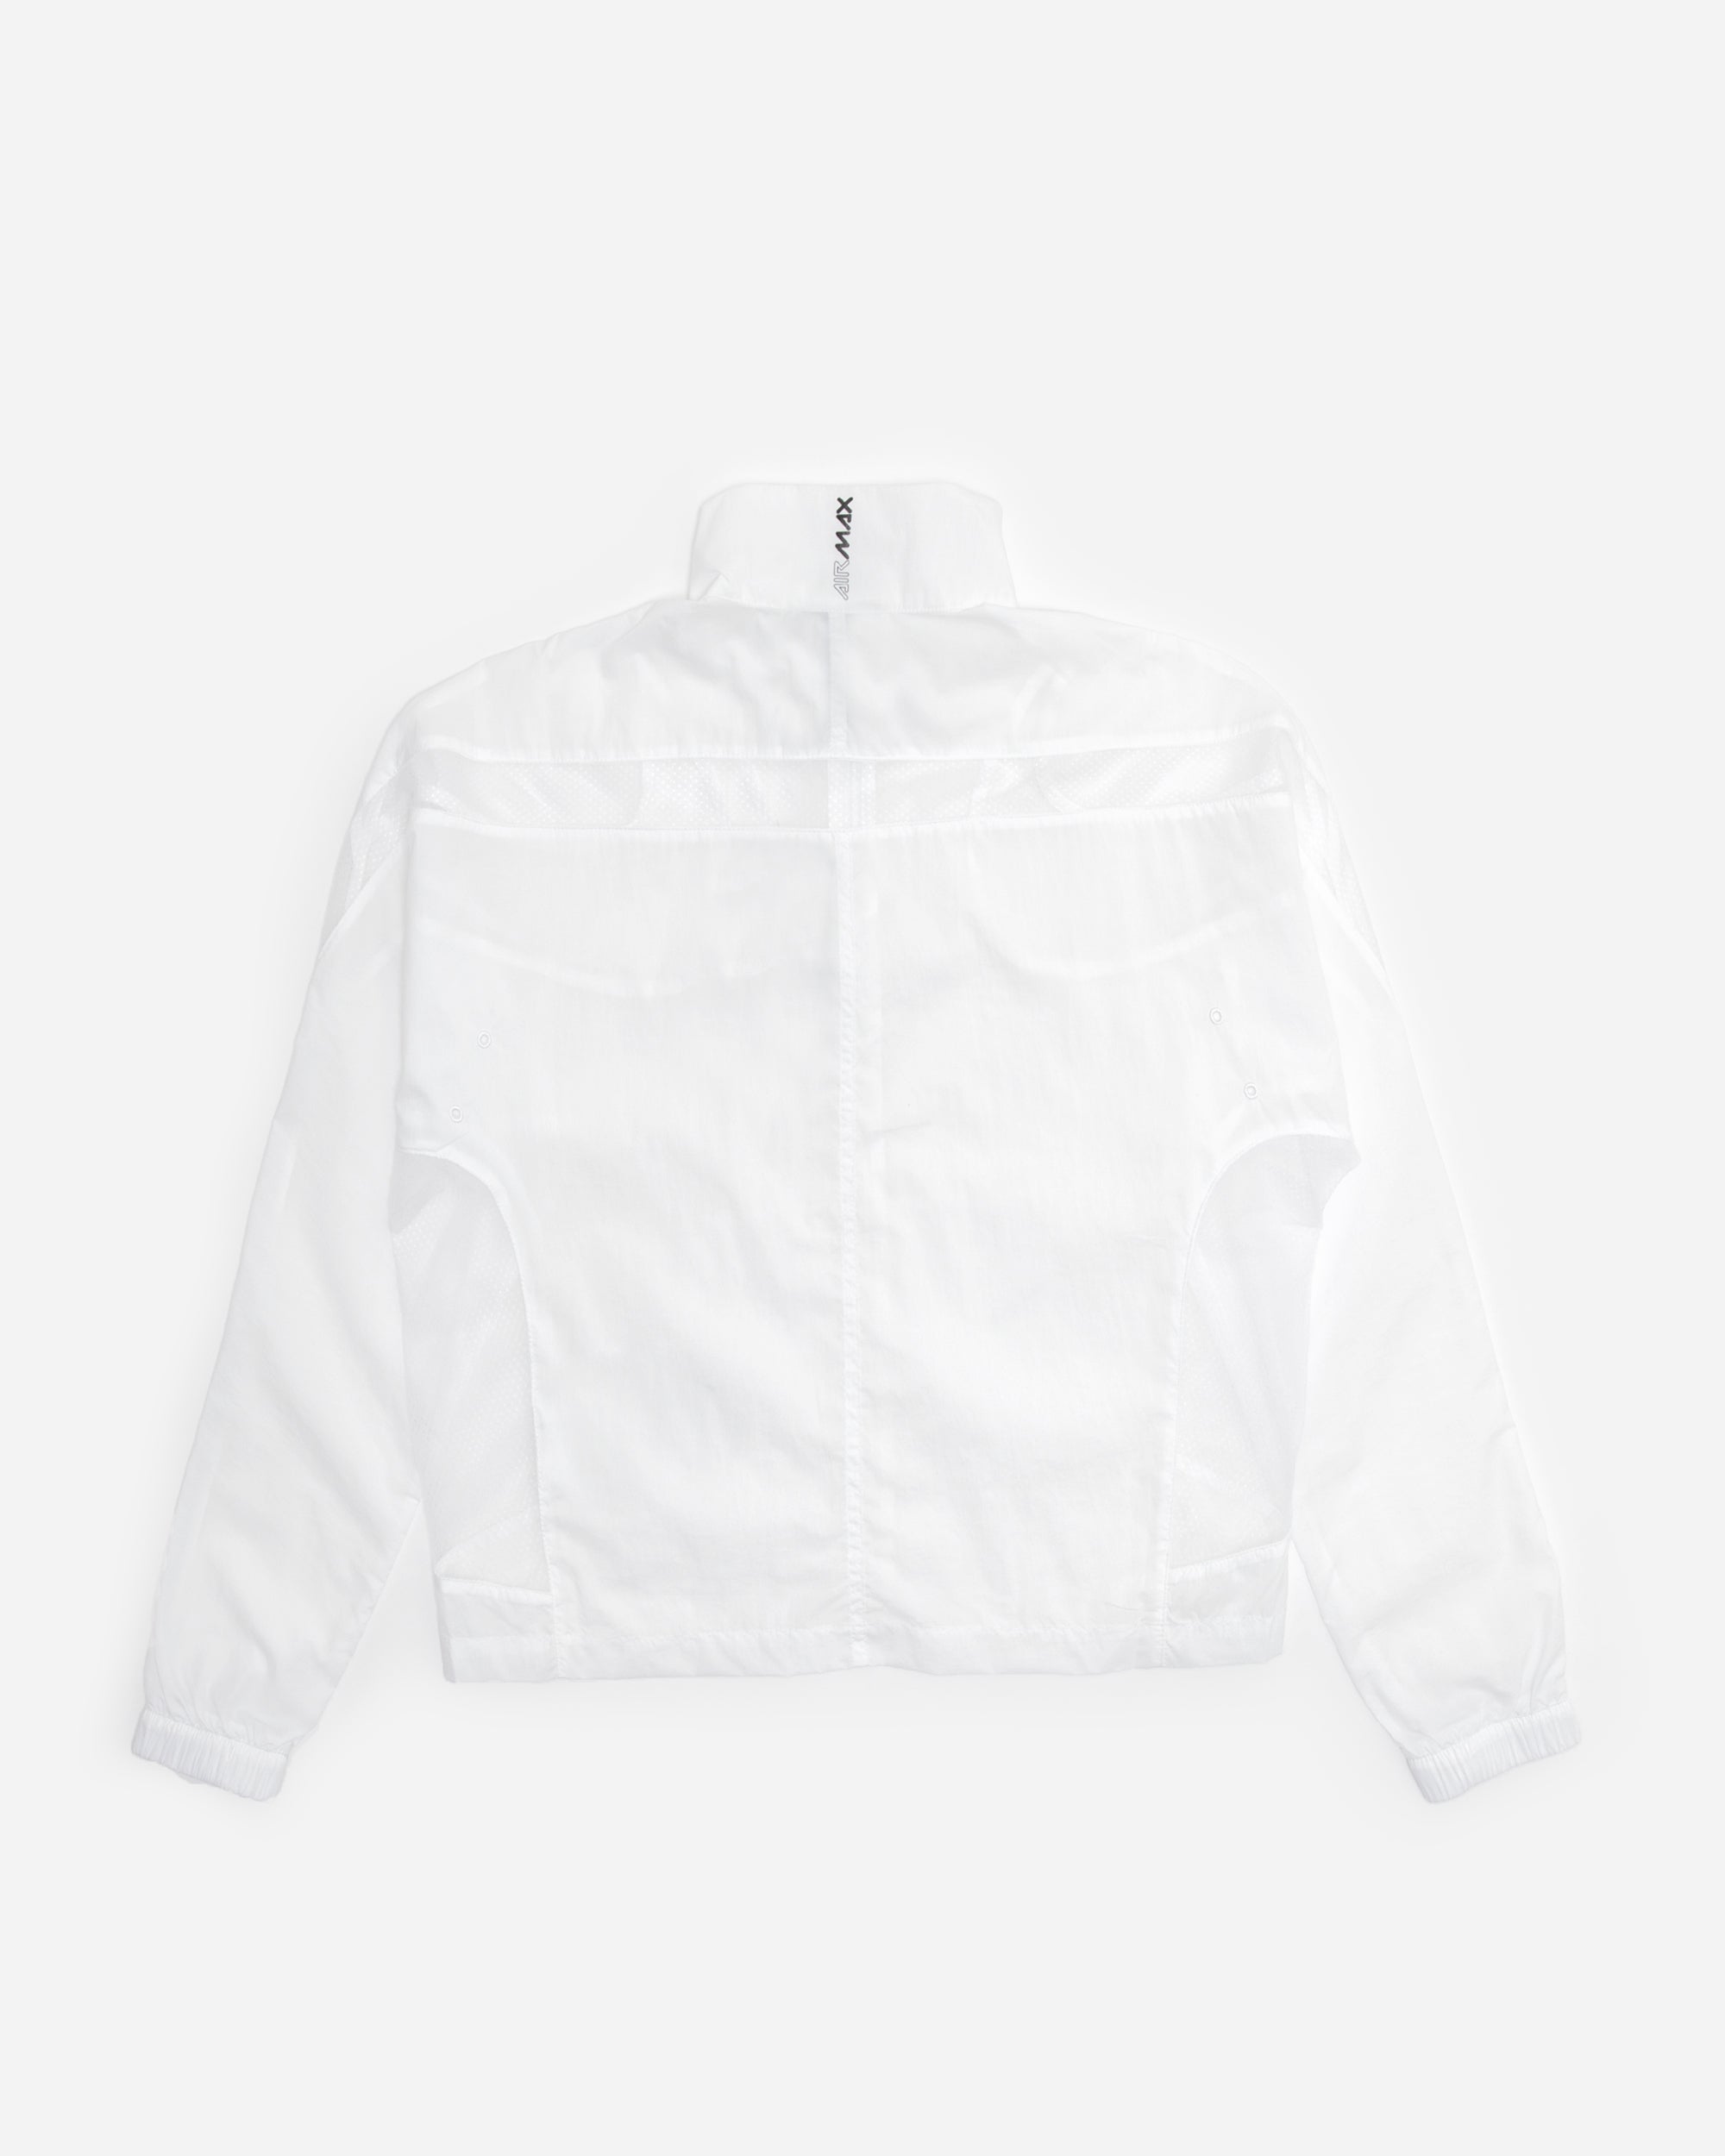 Nike Woven Jacket White/Black CZ8284-100